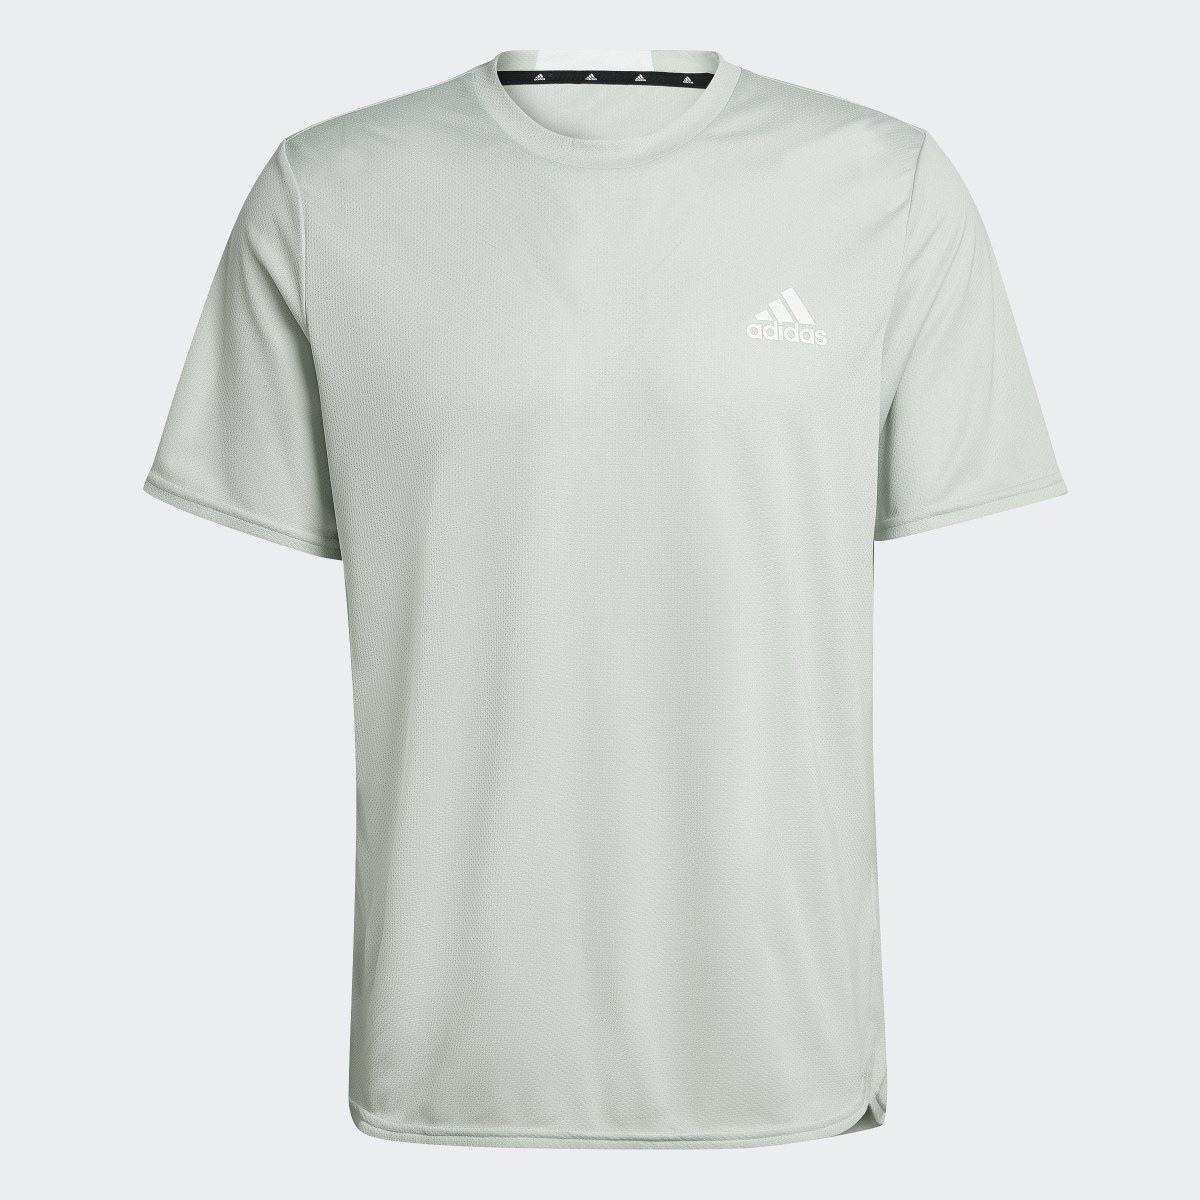 Adidas T-shirt AEROREADY Designed for Movement. 5